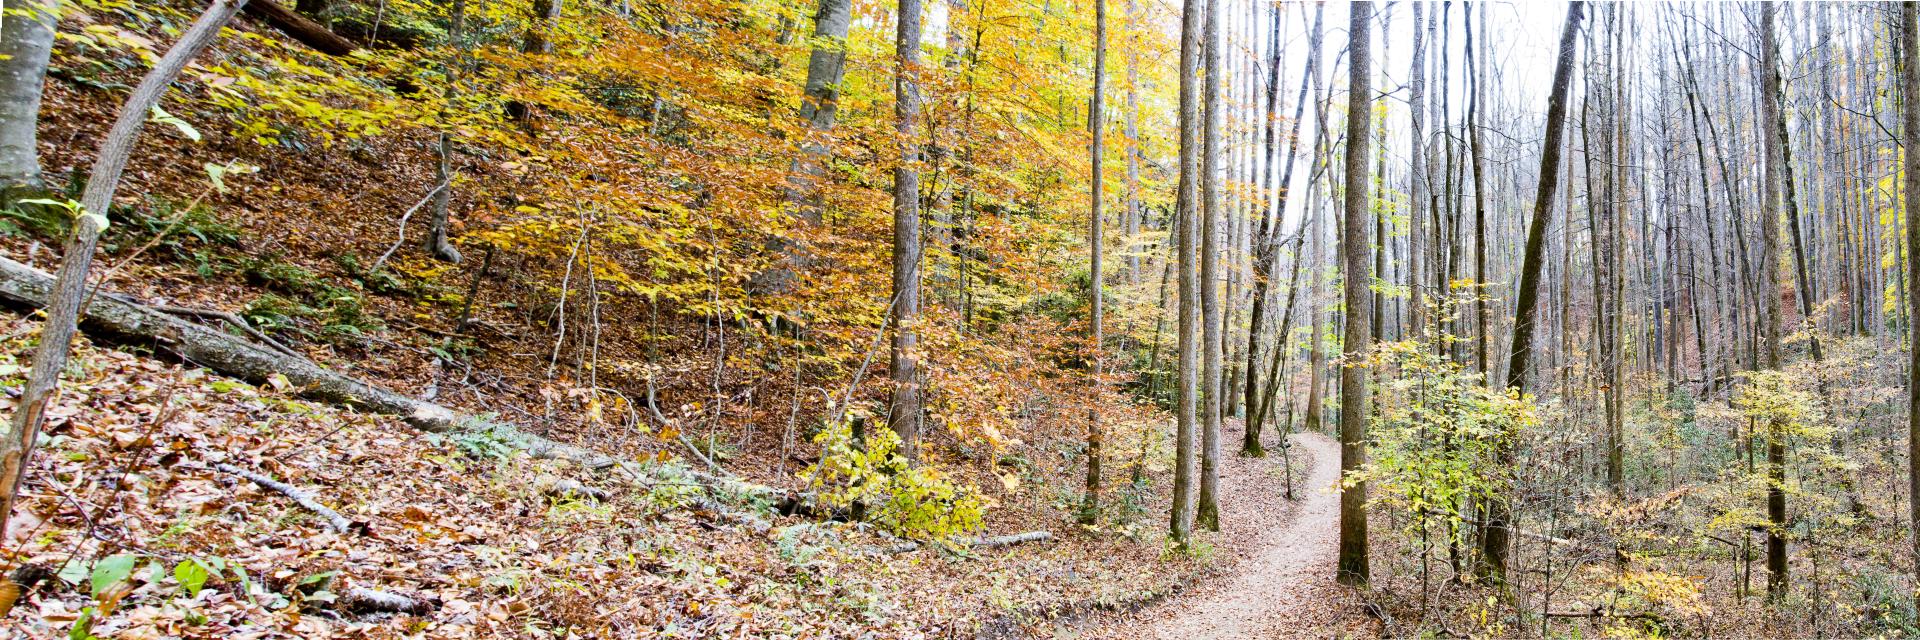 32365p nature, path through the wood, fall leaf change,,.jpg